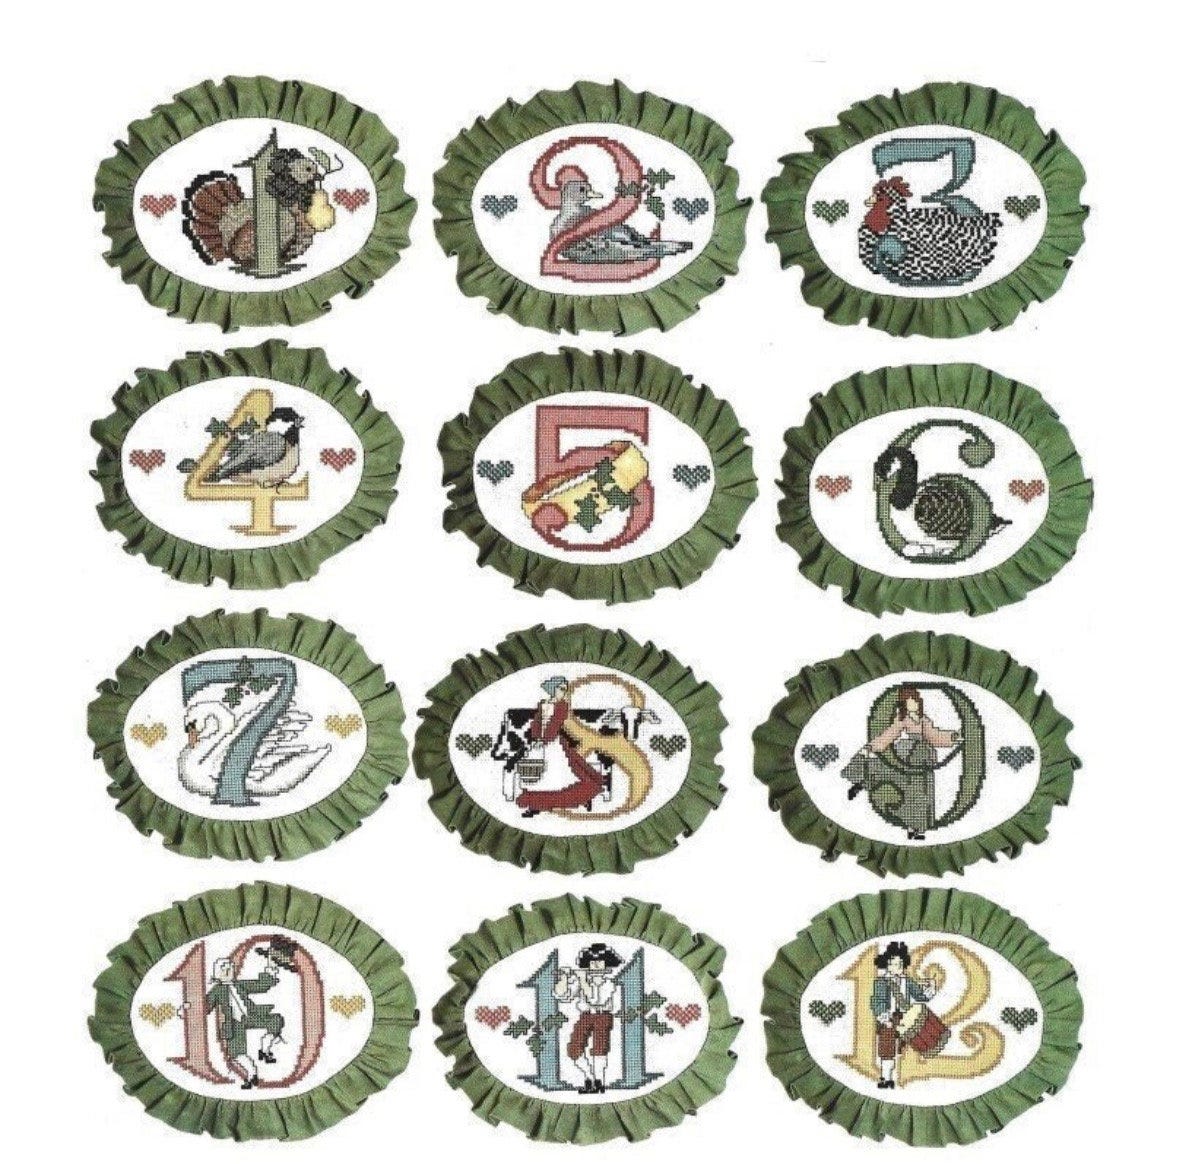 Vintage Cross Stitch Pattern 12 Days of Christmas Ornaments Set of 12 PDF Instant Digital Download Folk Art Holiday Decor